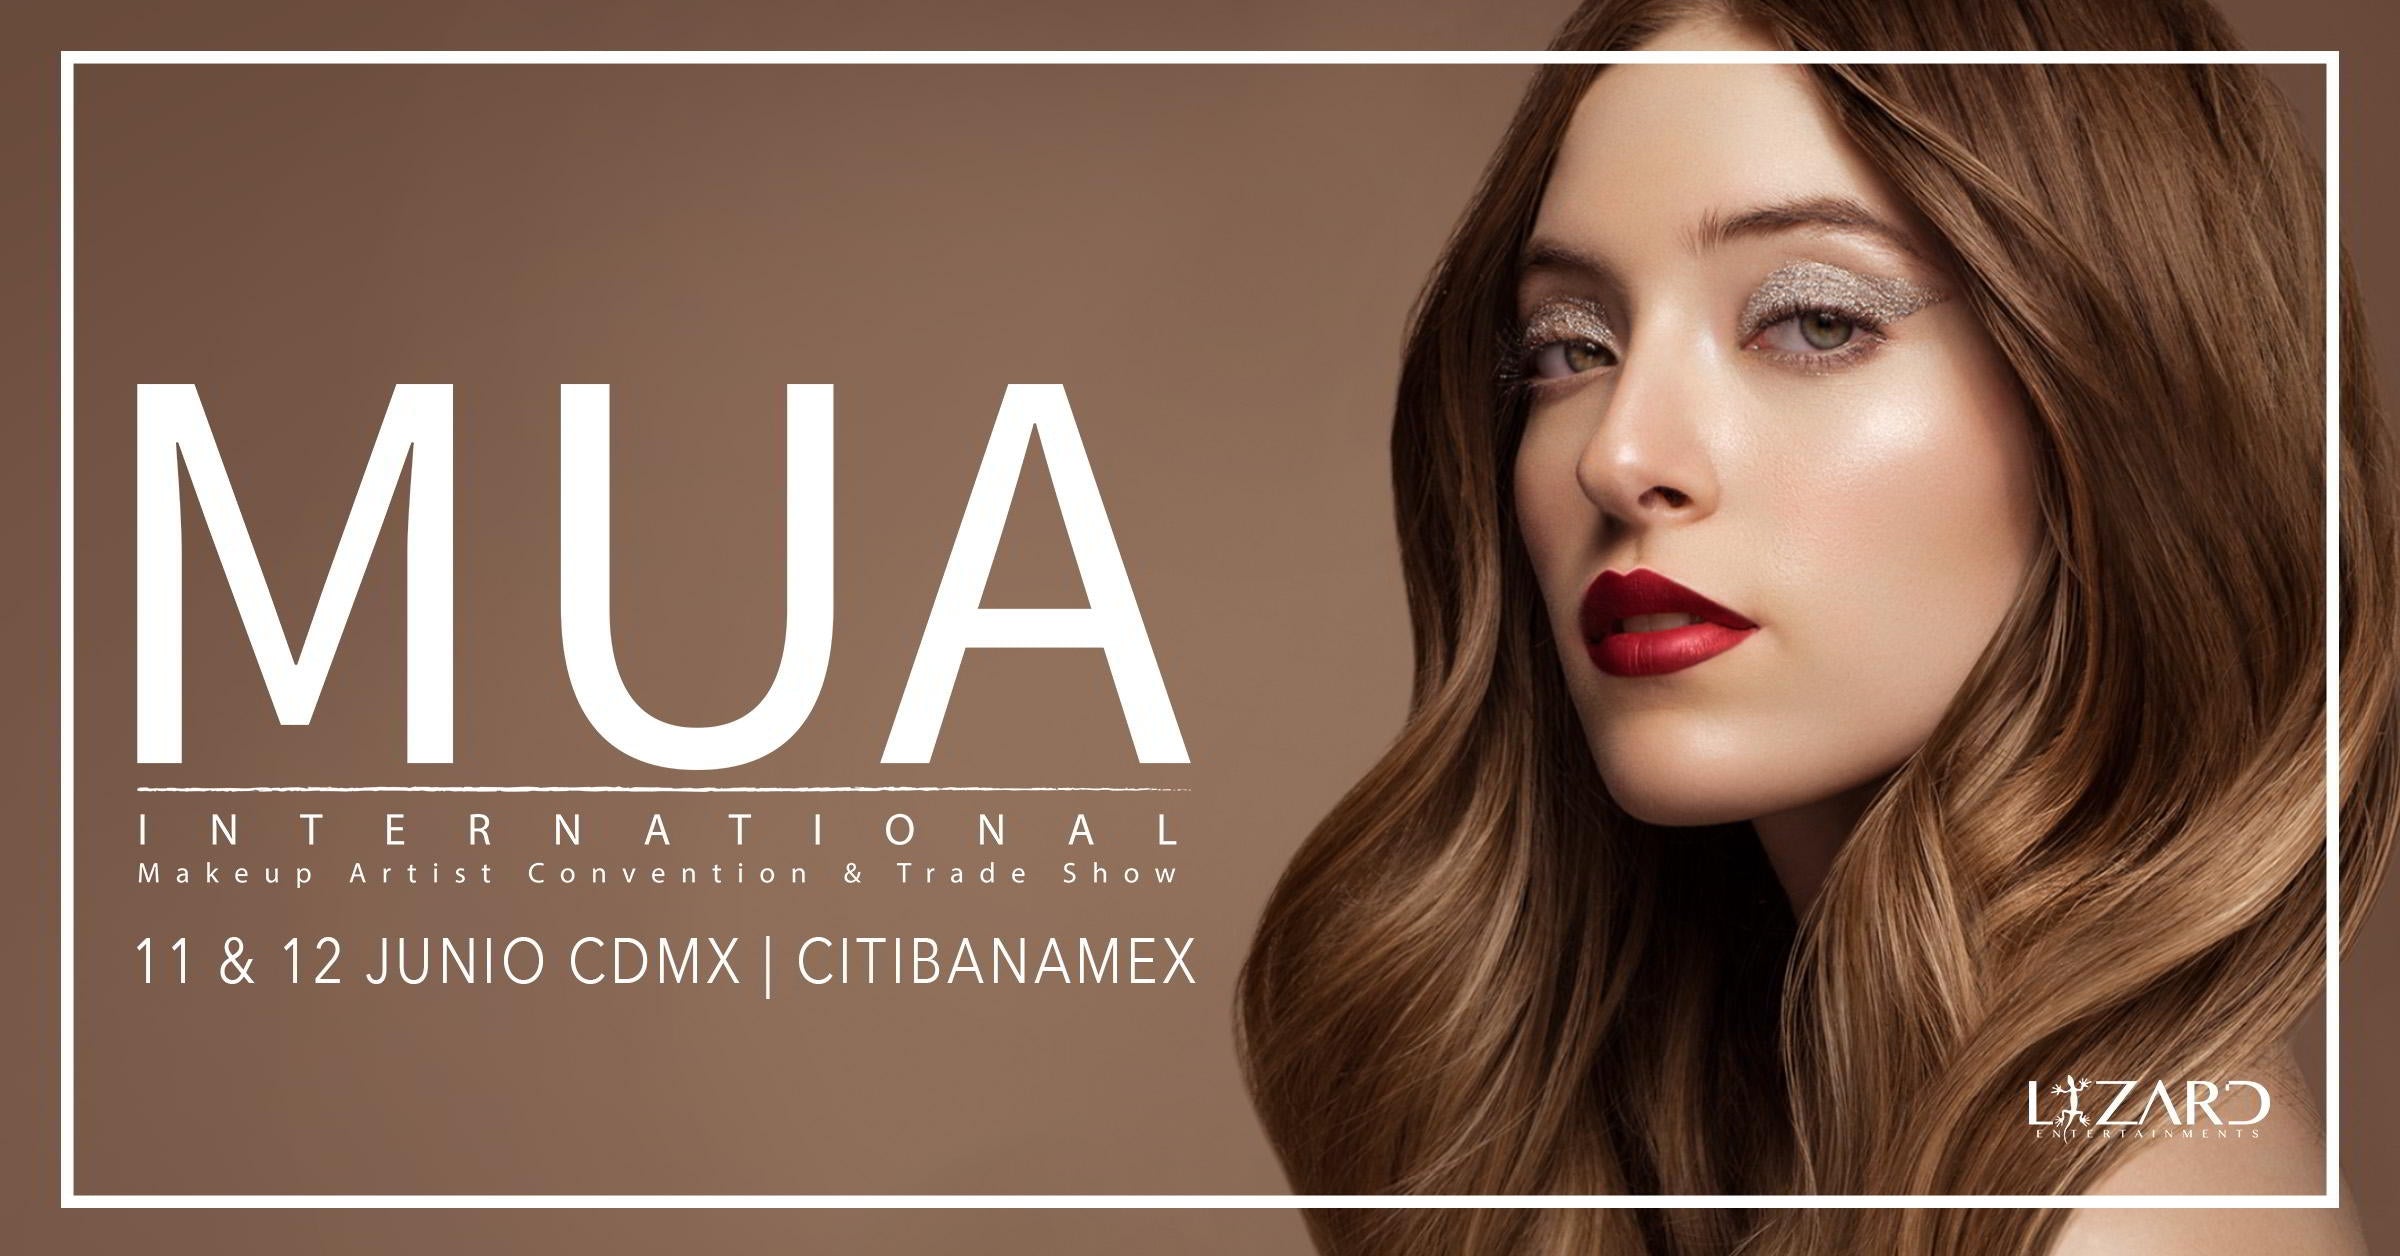 MUA 2017 the International Makeup Artist Convention & Trade Show